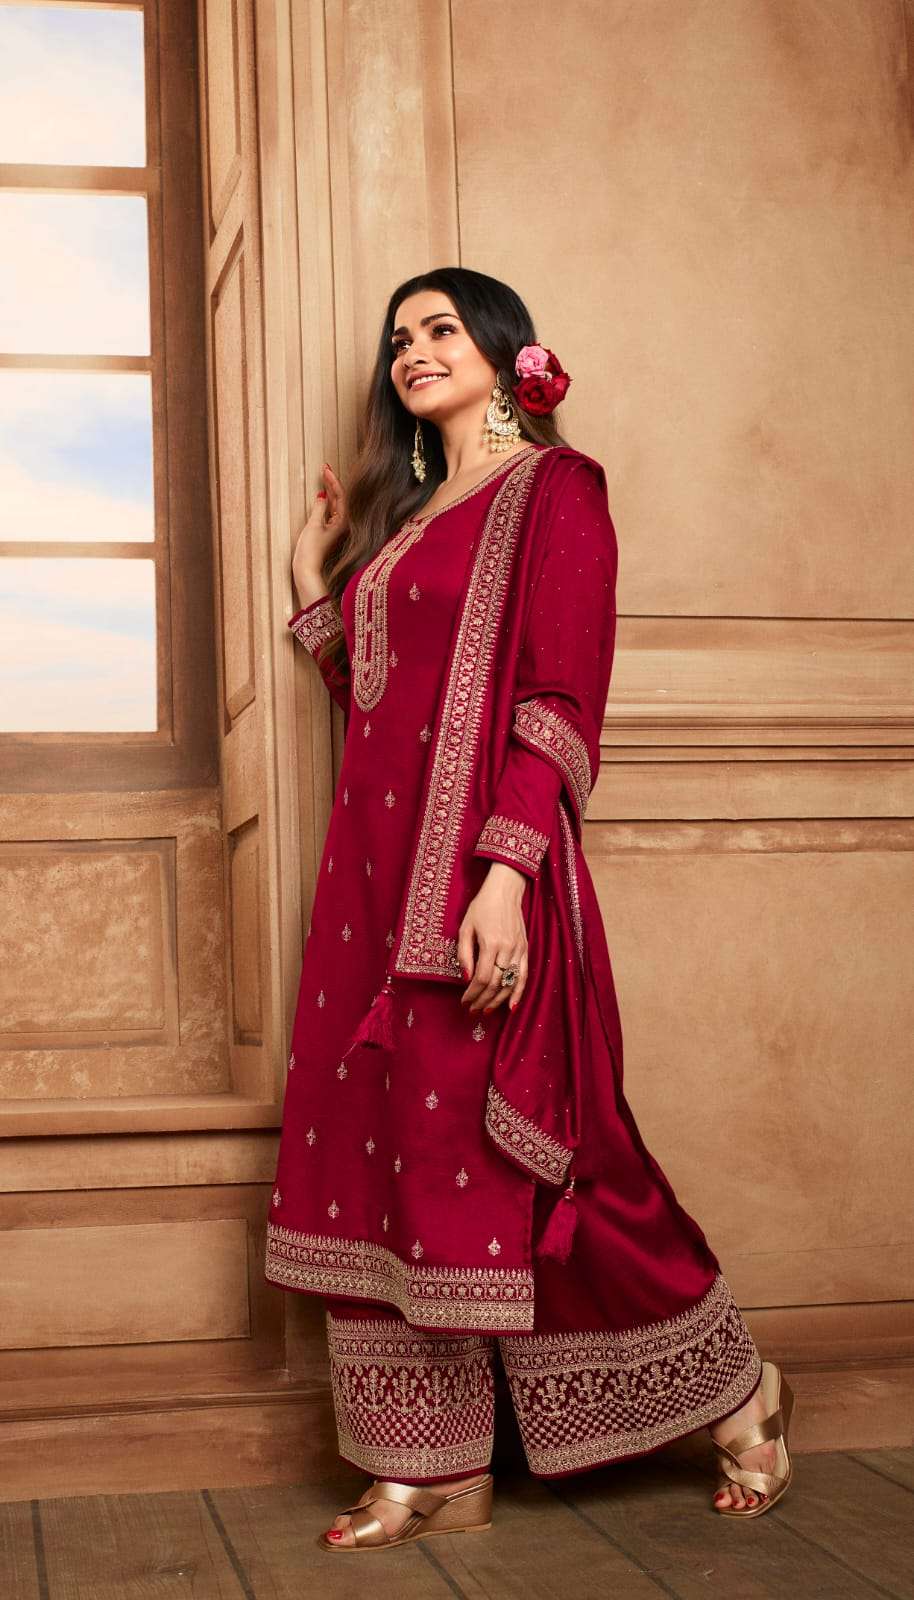 vinay fashion shaheen vol-3 61621-61625 series latest salwar kameez wholesaler surat gujarat